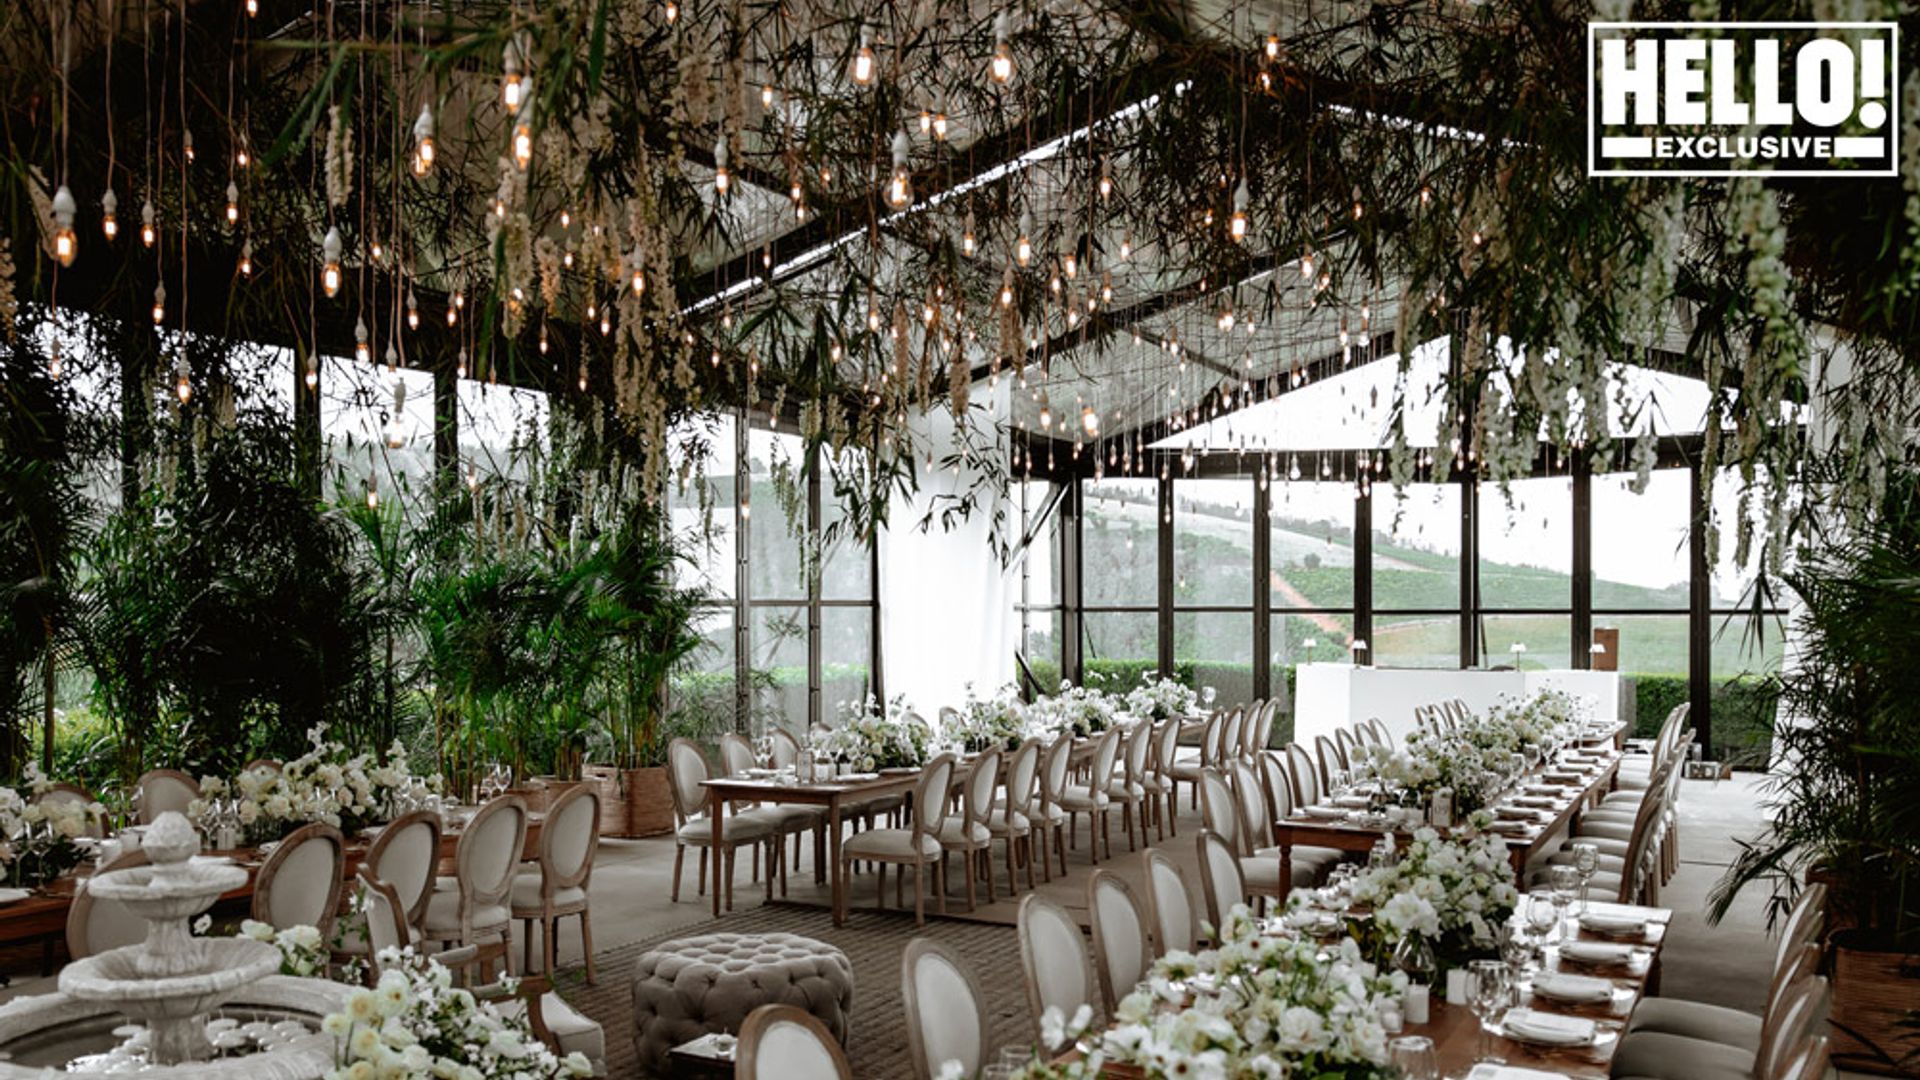 Inside Amelia Spencer and Greg Mallett's wedding reception